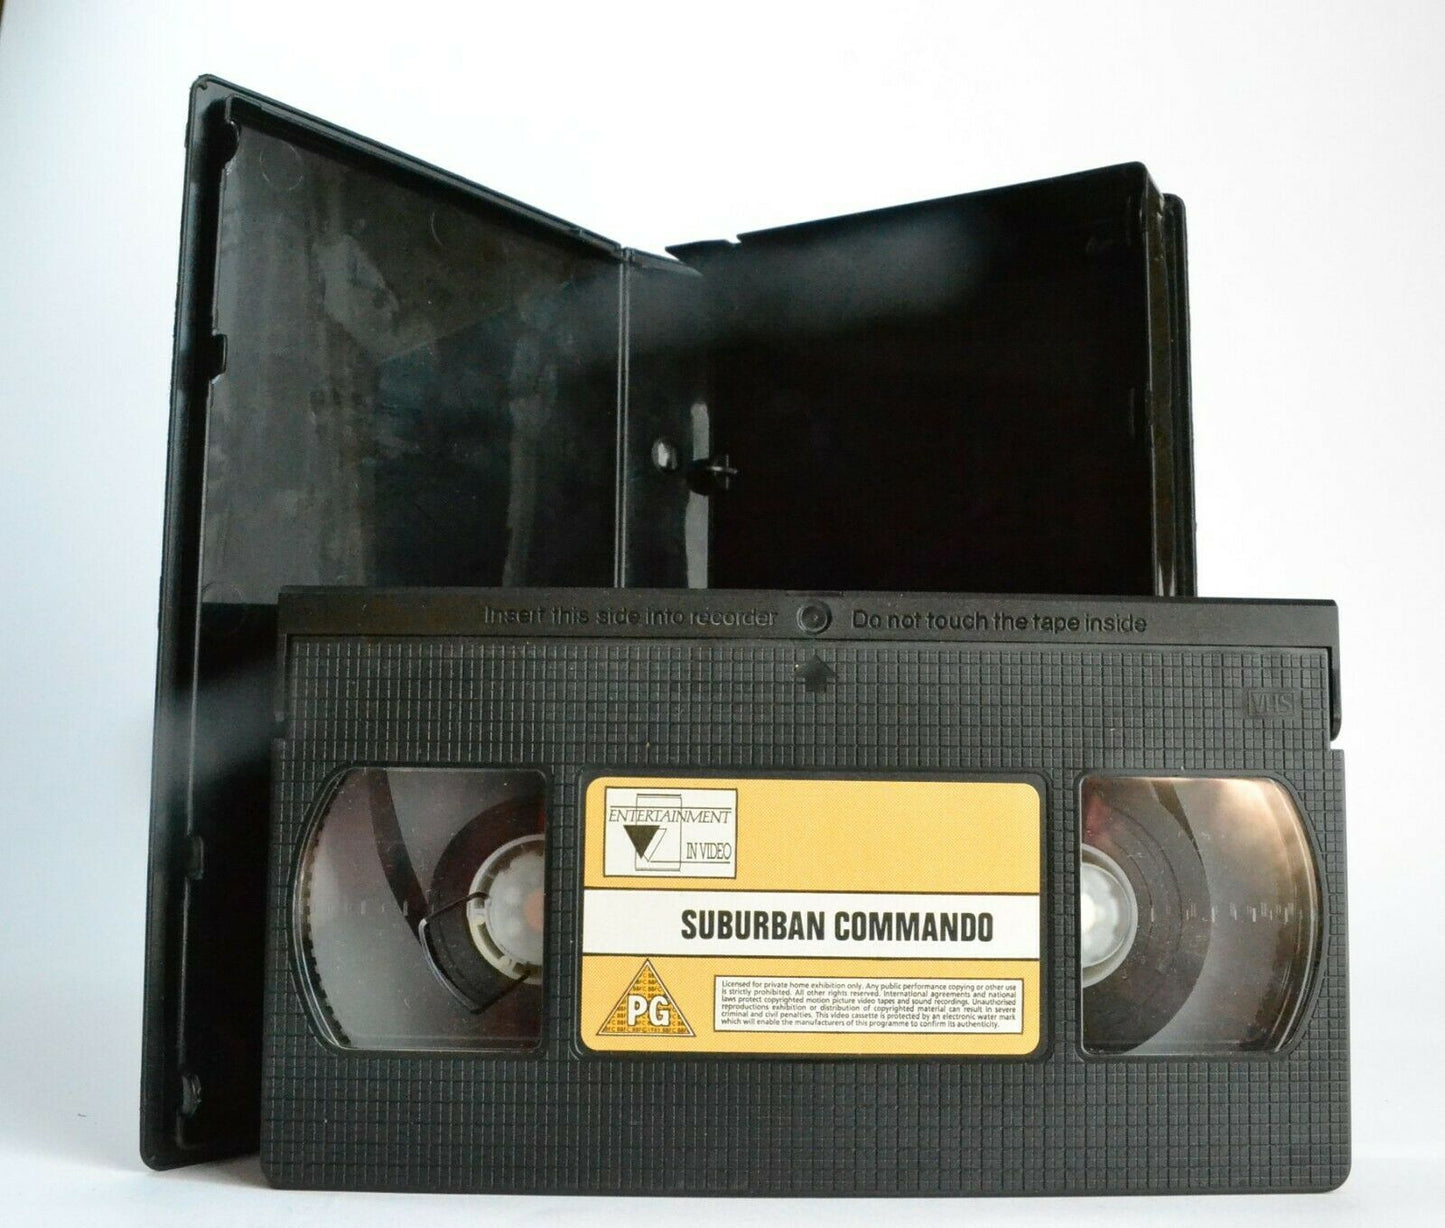 Suburban Commando - WWF's Hulk Hogan - Christopher Lloyd - New Line (1991) - VHS-